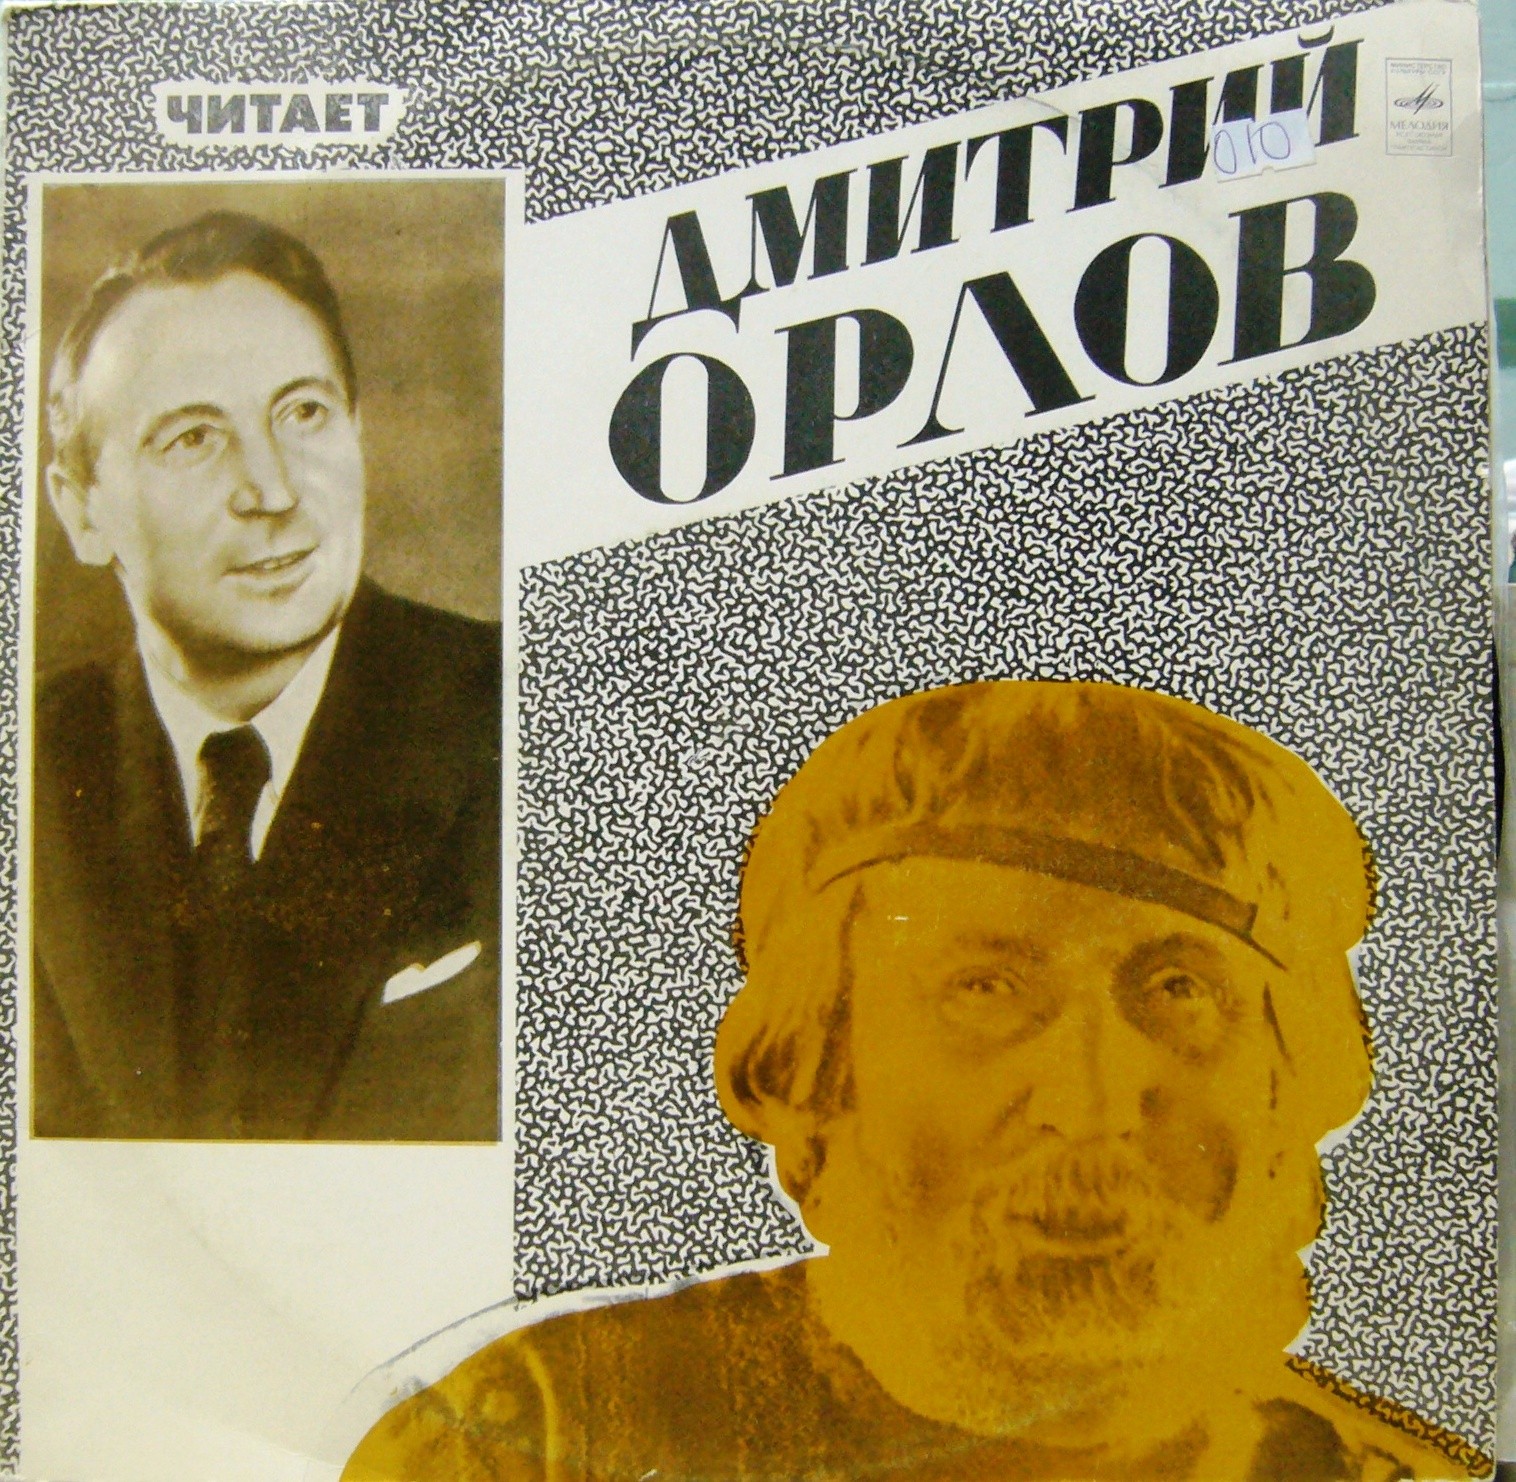 ЧИТАЕТ ДМИТРИЙ ОРЛОВ (1892—1955)